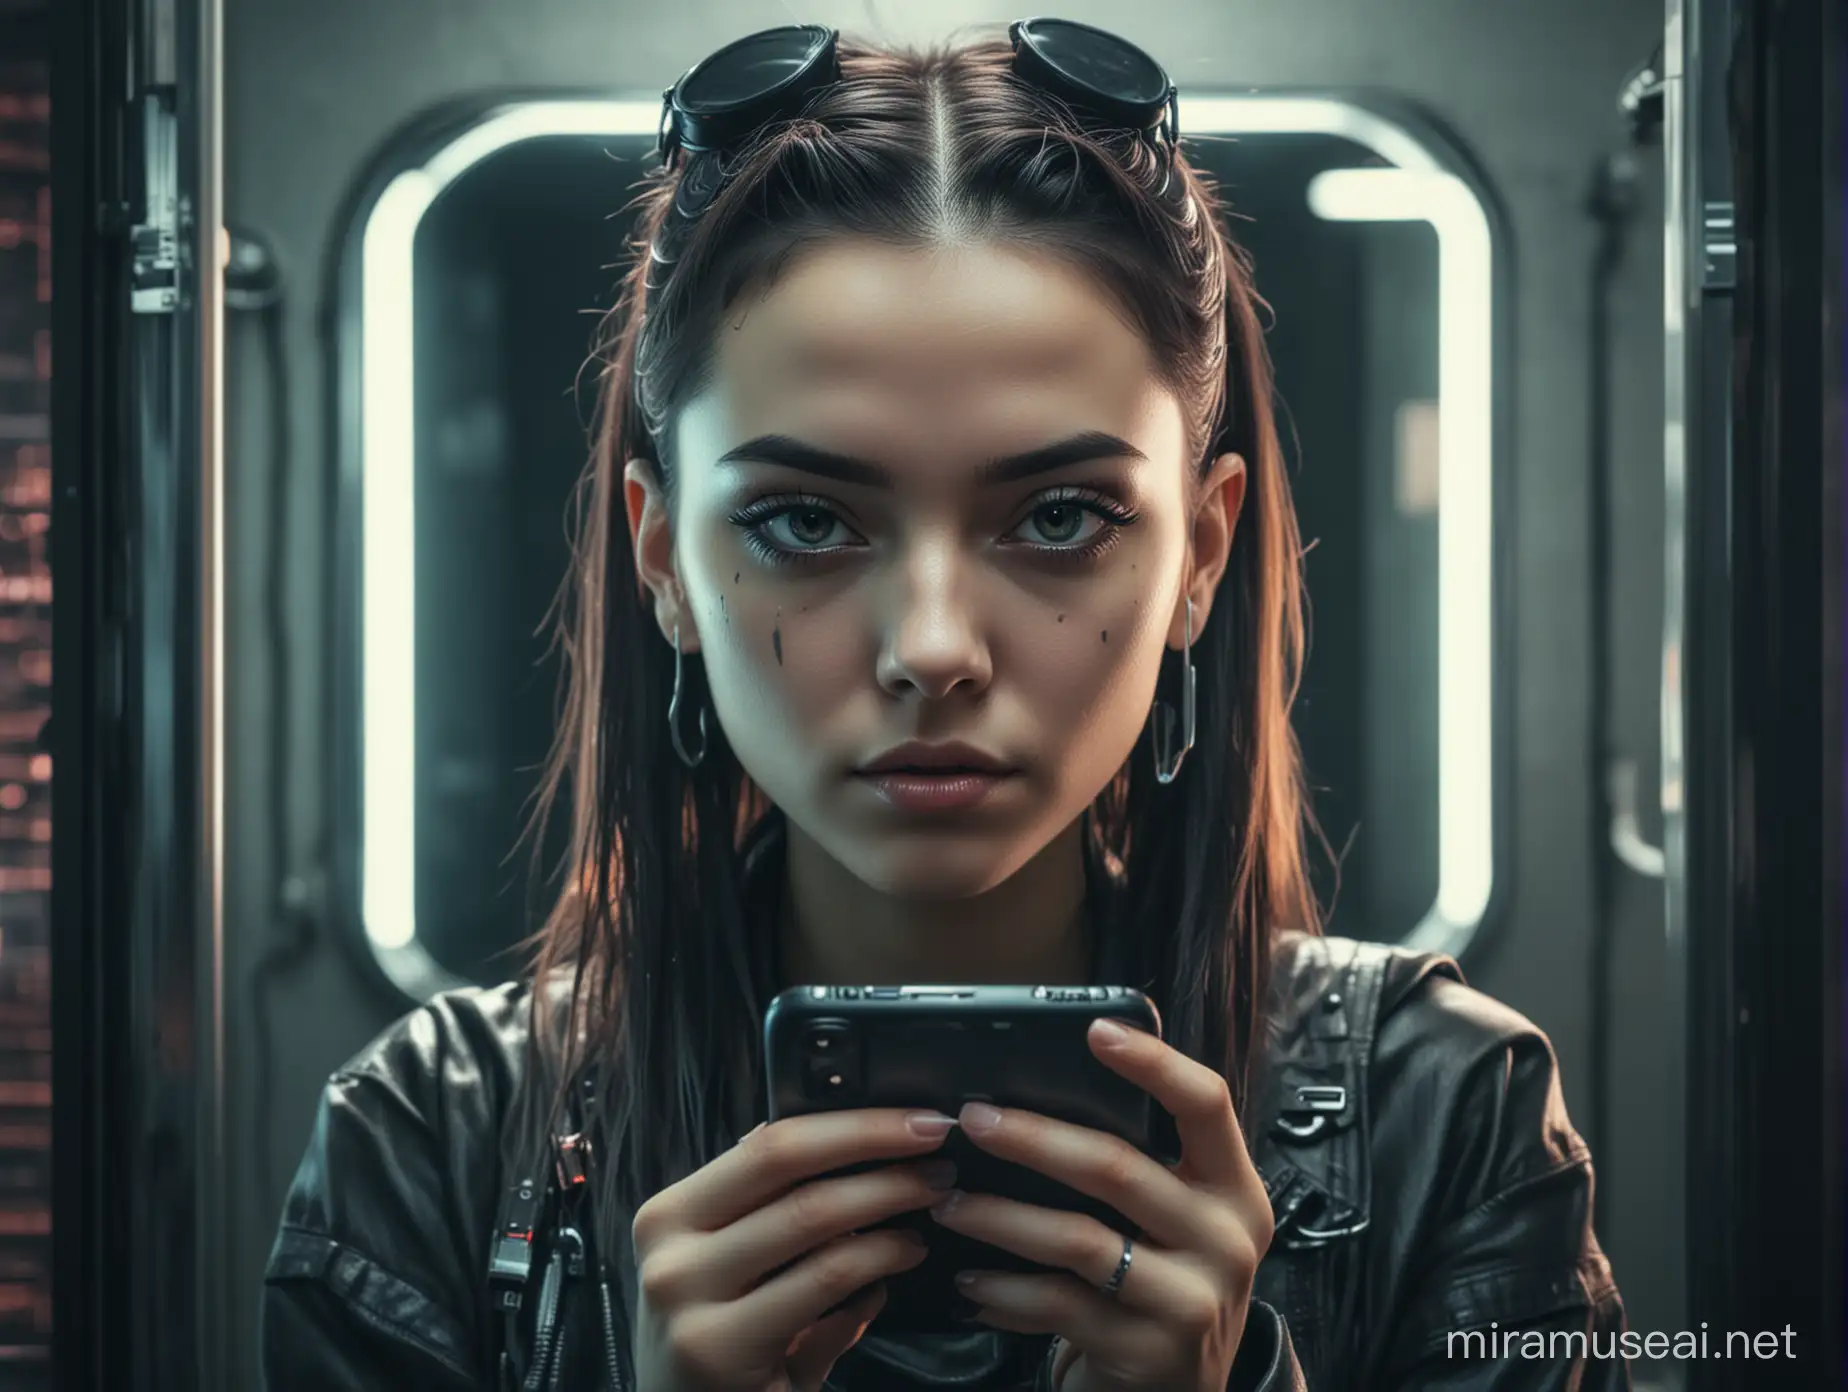 One Girr looking in mirror, cyberpunk style, smartphone social media